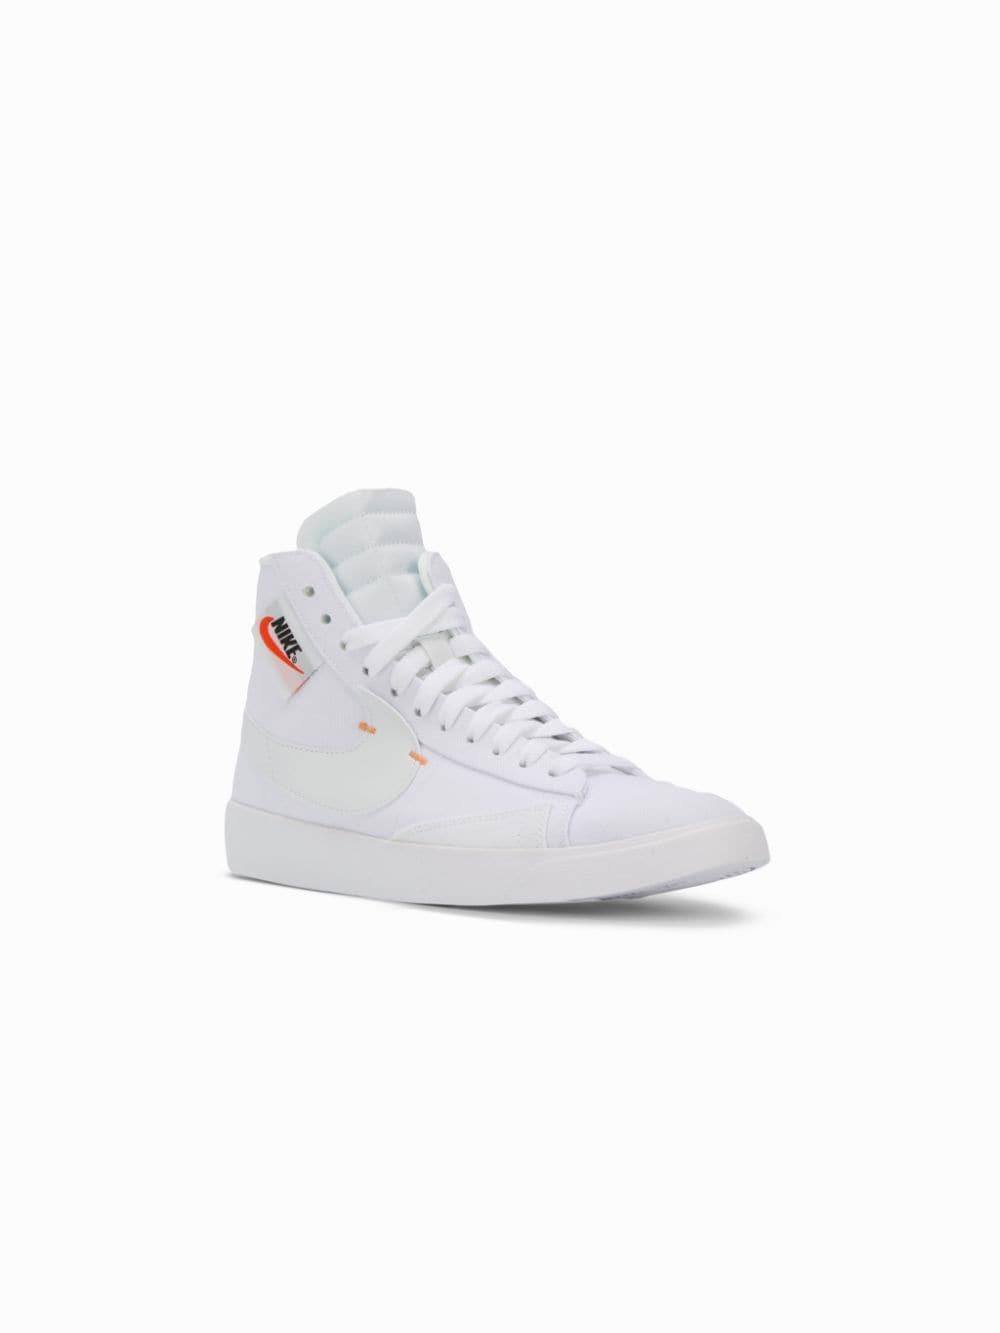 Nike Canvas Blazer Mid Rebel High Top Sneakers in White & Orange (White) |  Lyst